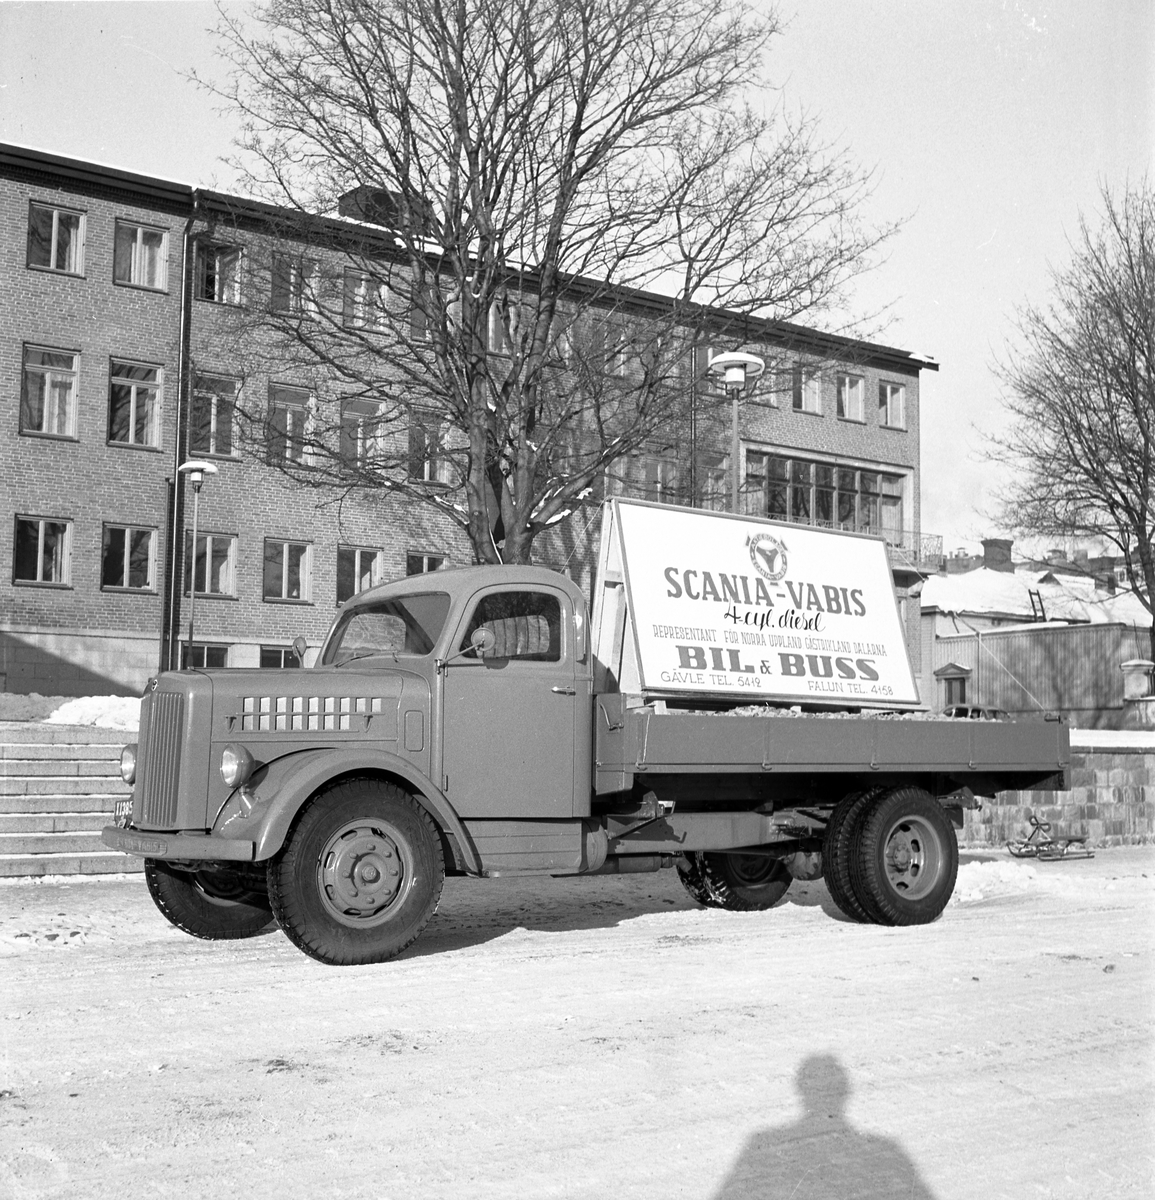 Scania-Vabis lastbil. Bil o Buss. Den 15 februari 1947